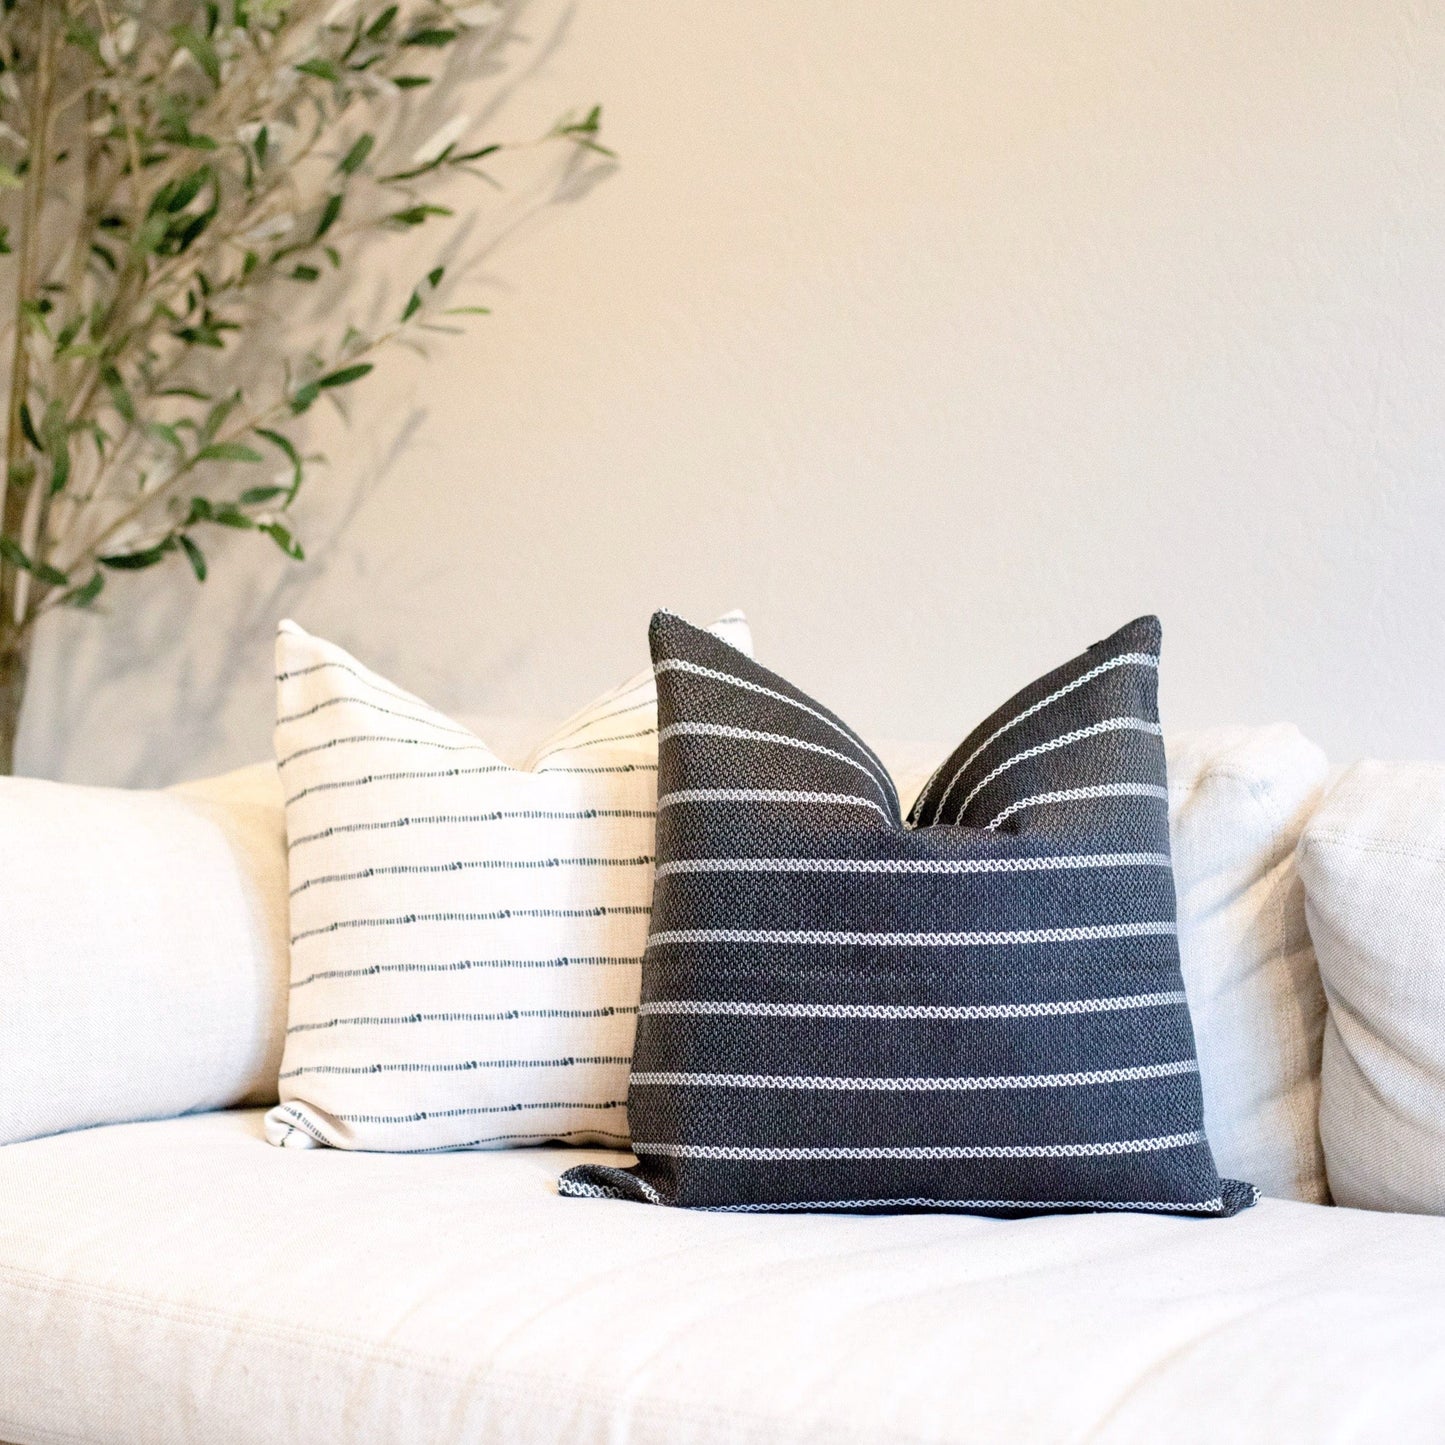 Modern Minimalist Pillow Covers - Throw Pillows